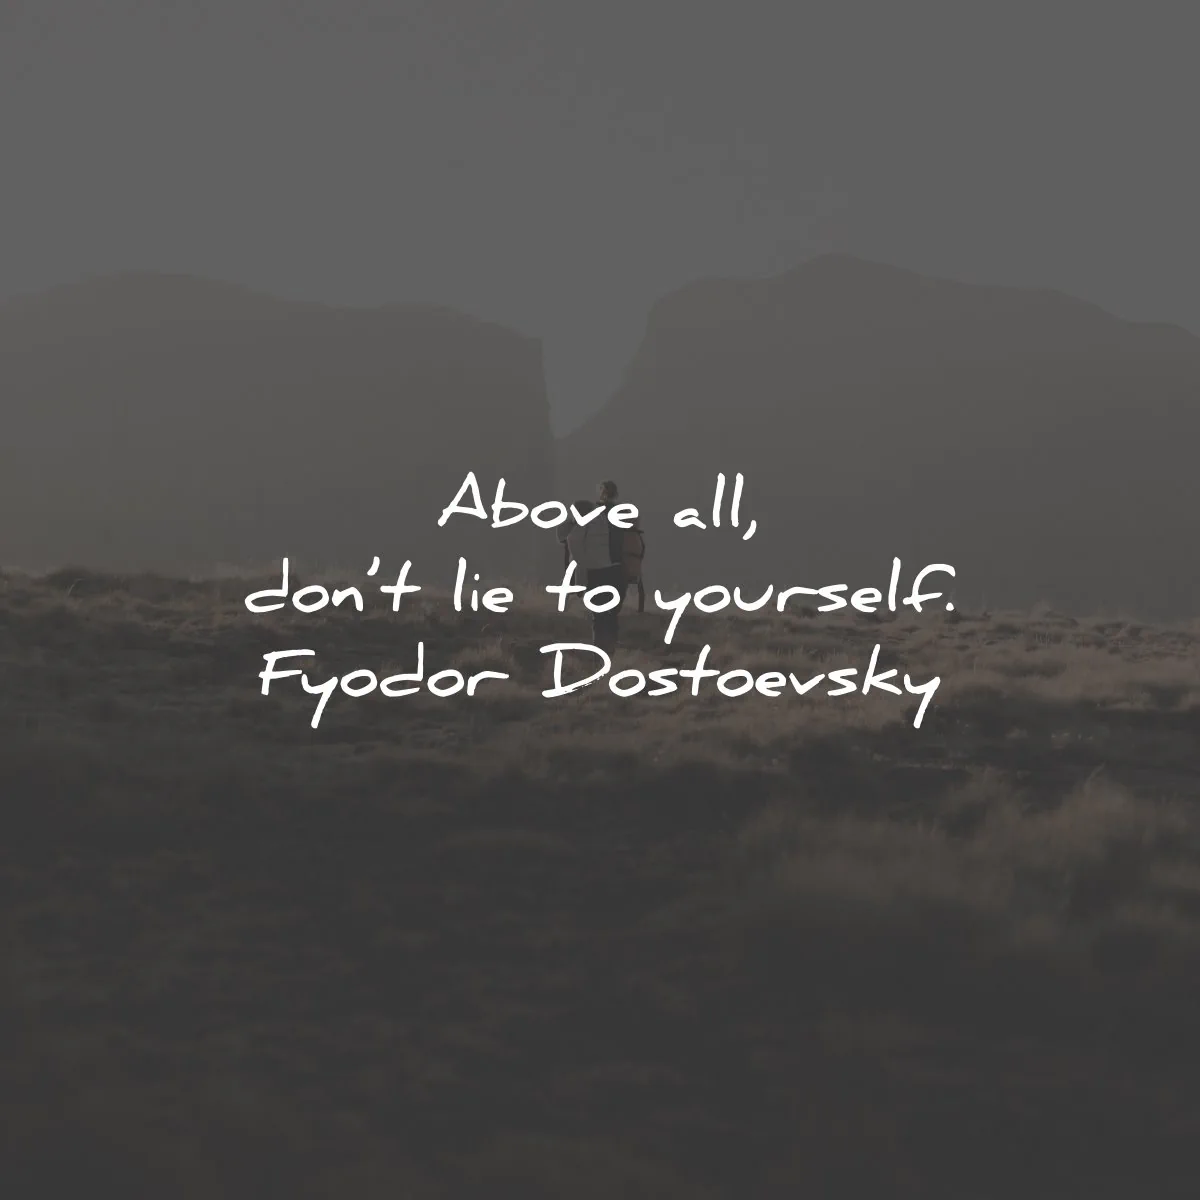 fyodor dostoevsky quotes above dont lie yourself wisdom